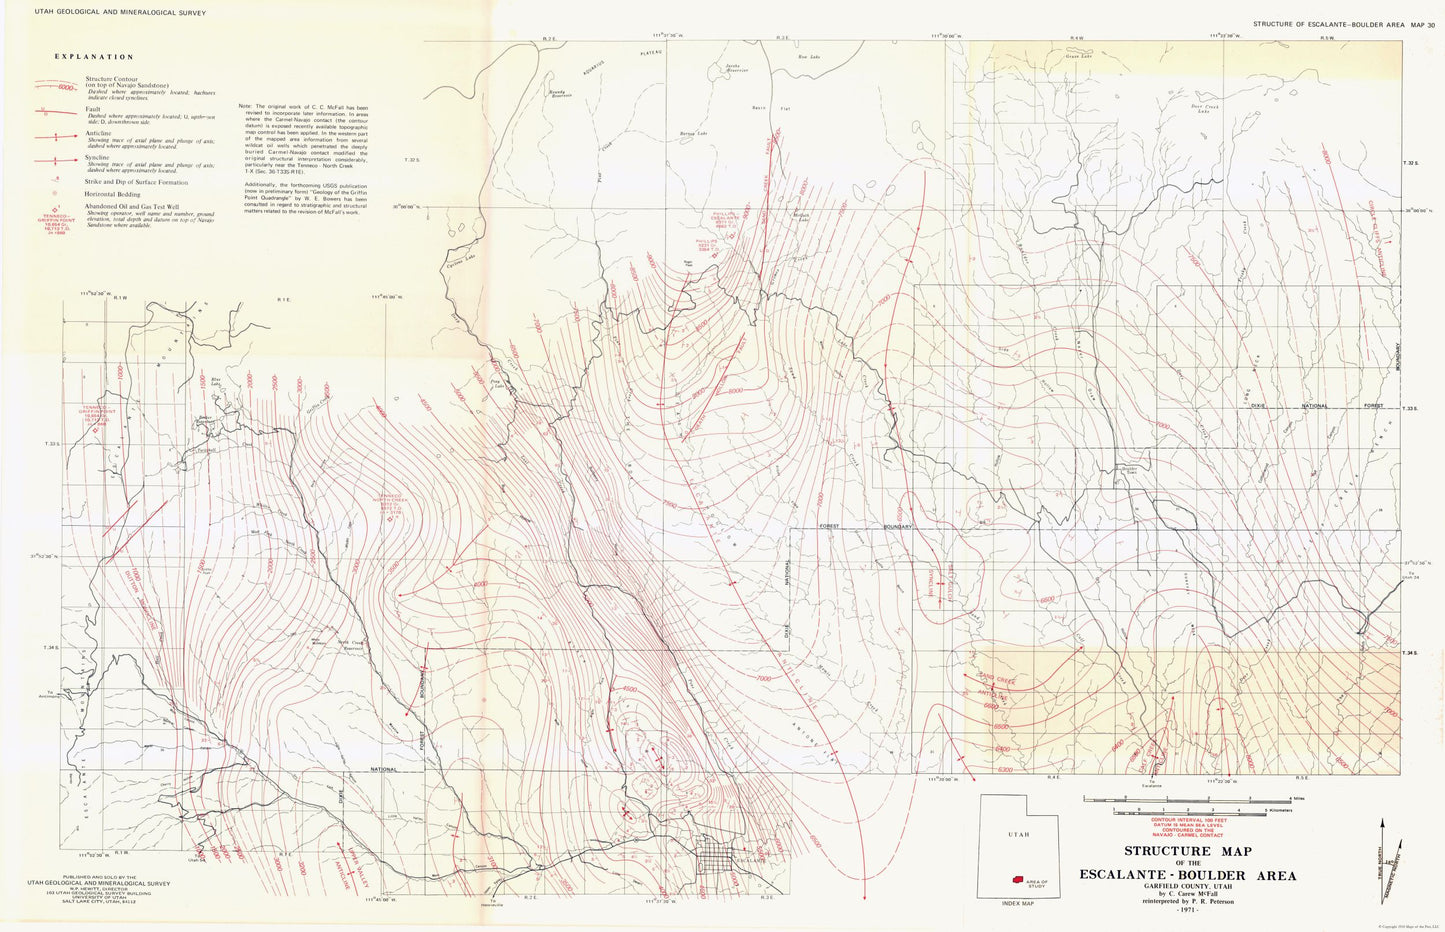 Historic Mine Map - Utah Esacalante Boulder Structure Mines - McFall 1971 - 35.65 x 23 - Vintage Wall Art